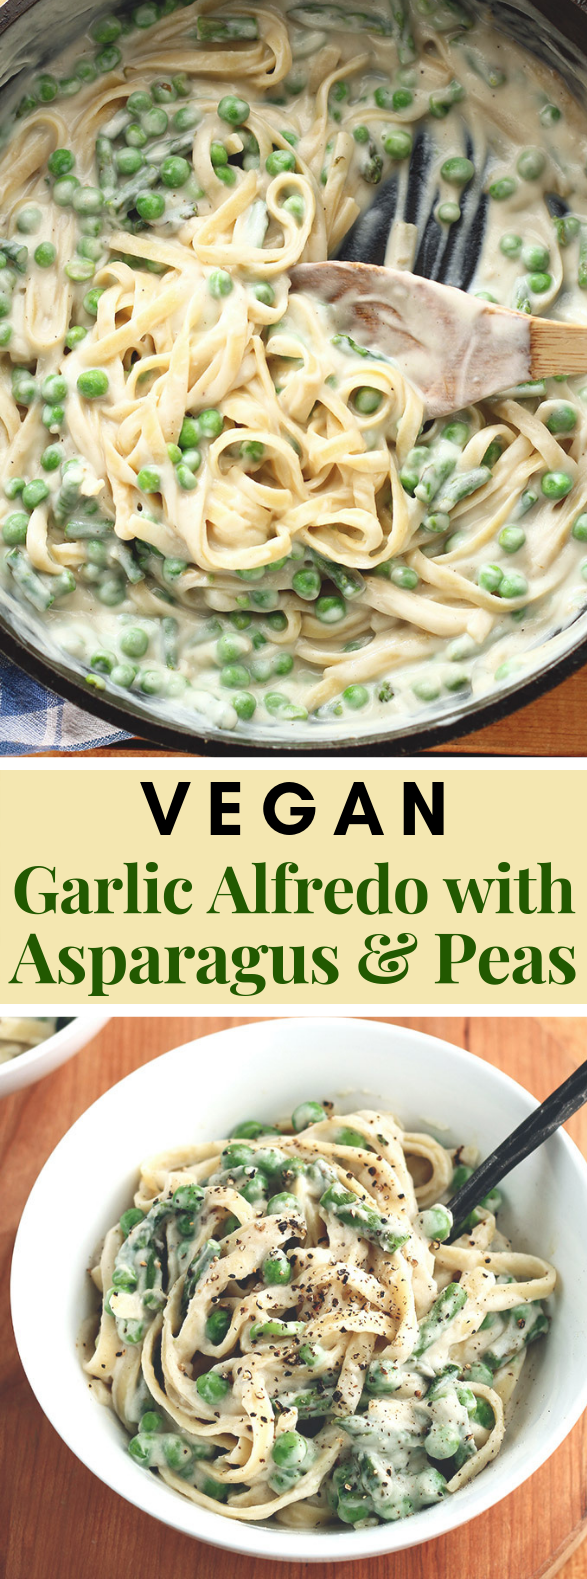 VEGAN GARLIC ALFREDO WITH ASPARAGUS & PEAS #vegetarian #veganrecipe